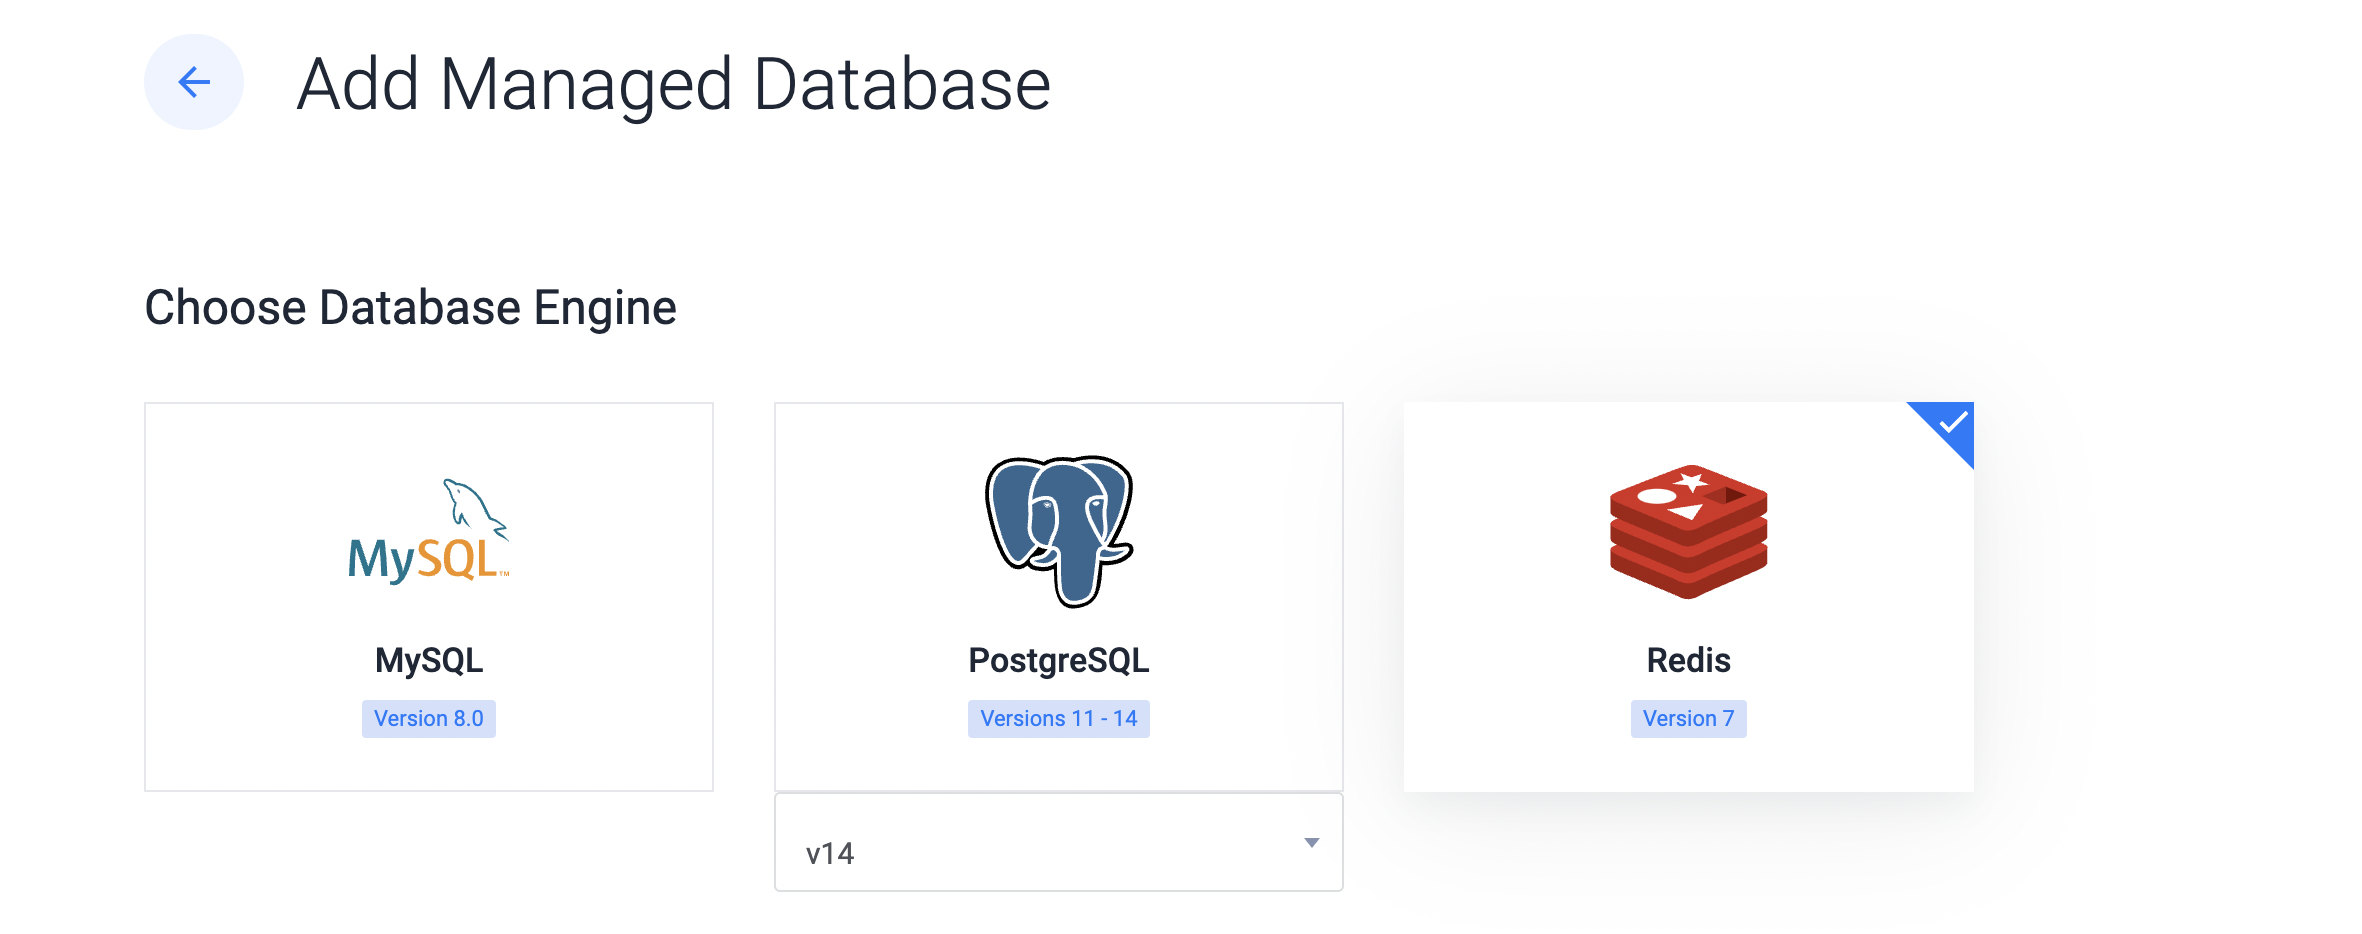 Choose the Redis® database engine